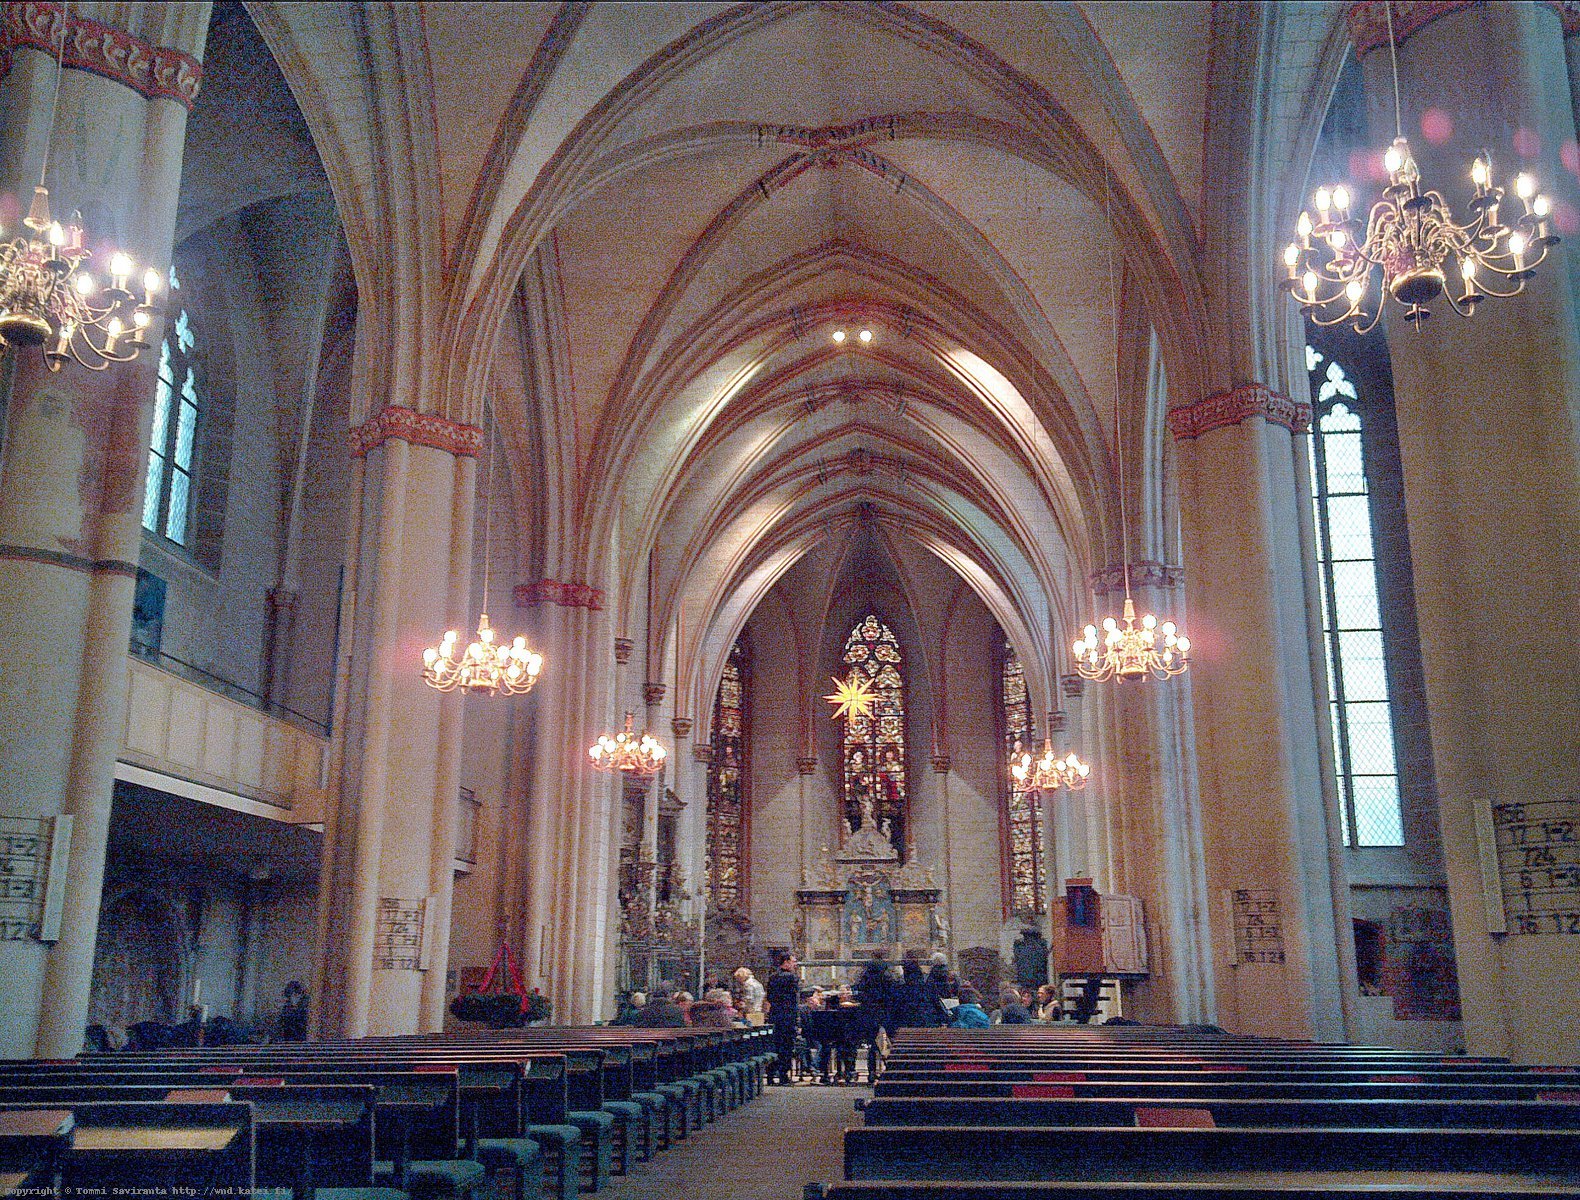 Inside St. Marien's church